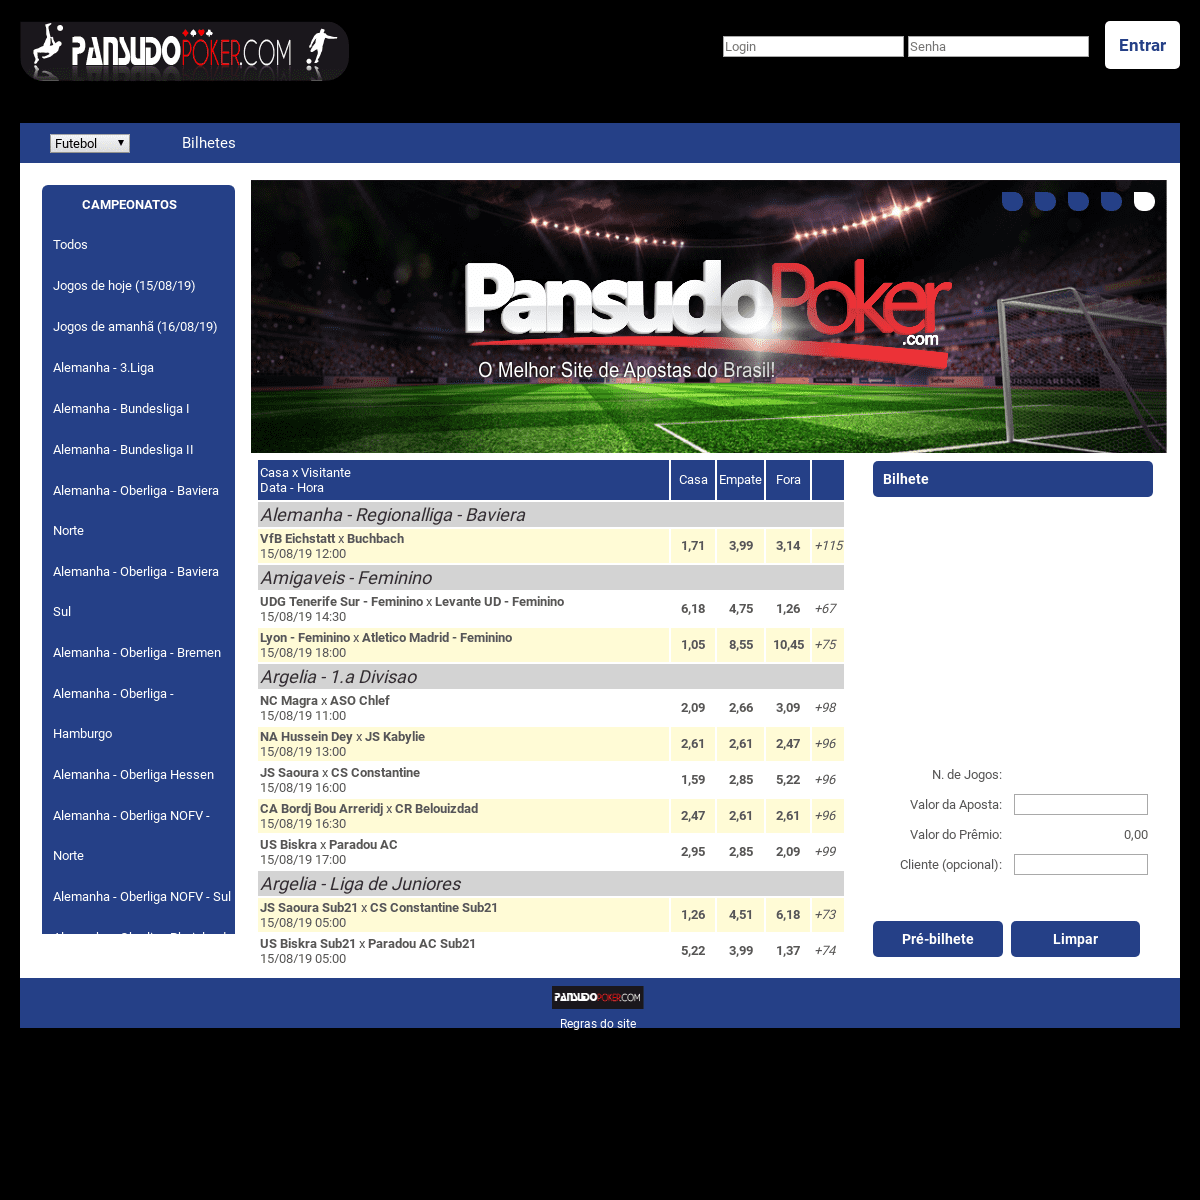 A complete backup of pansudopoker.com